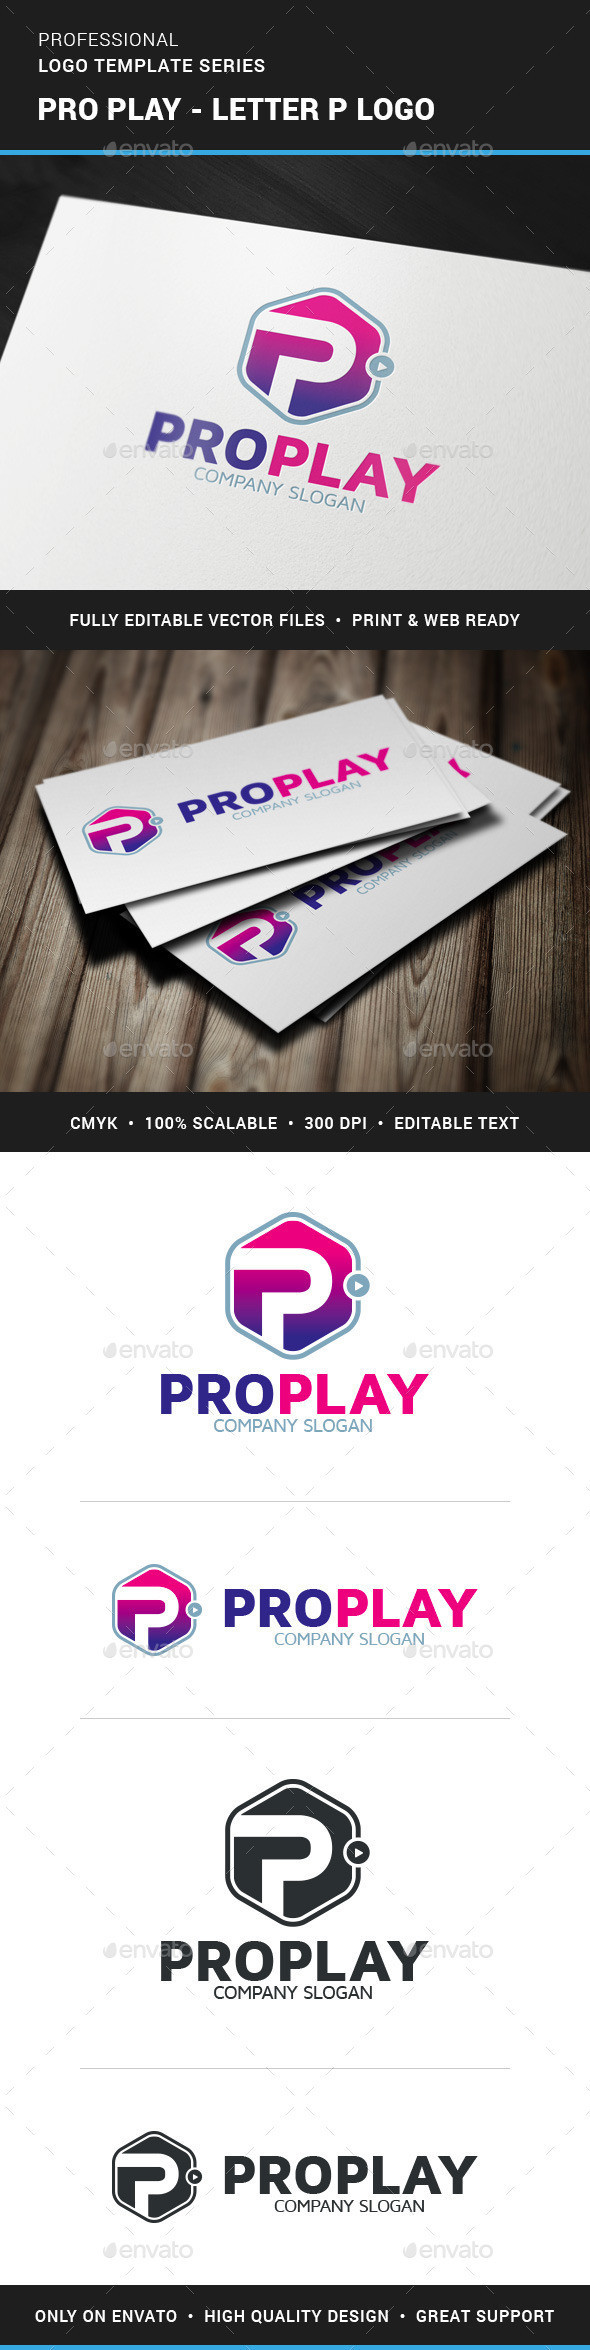 Pro play logo template